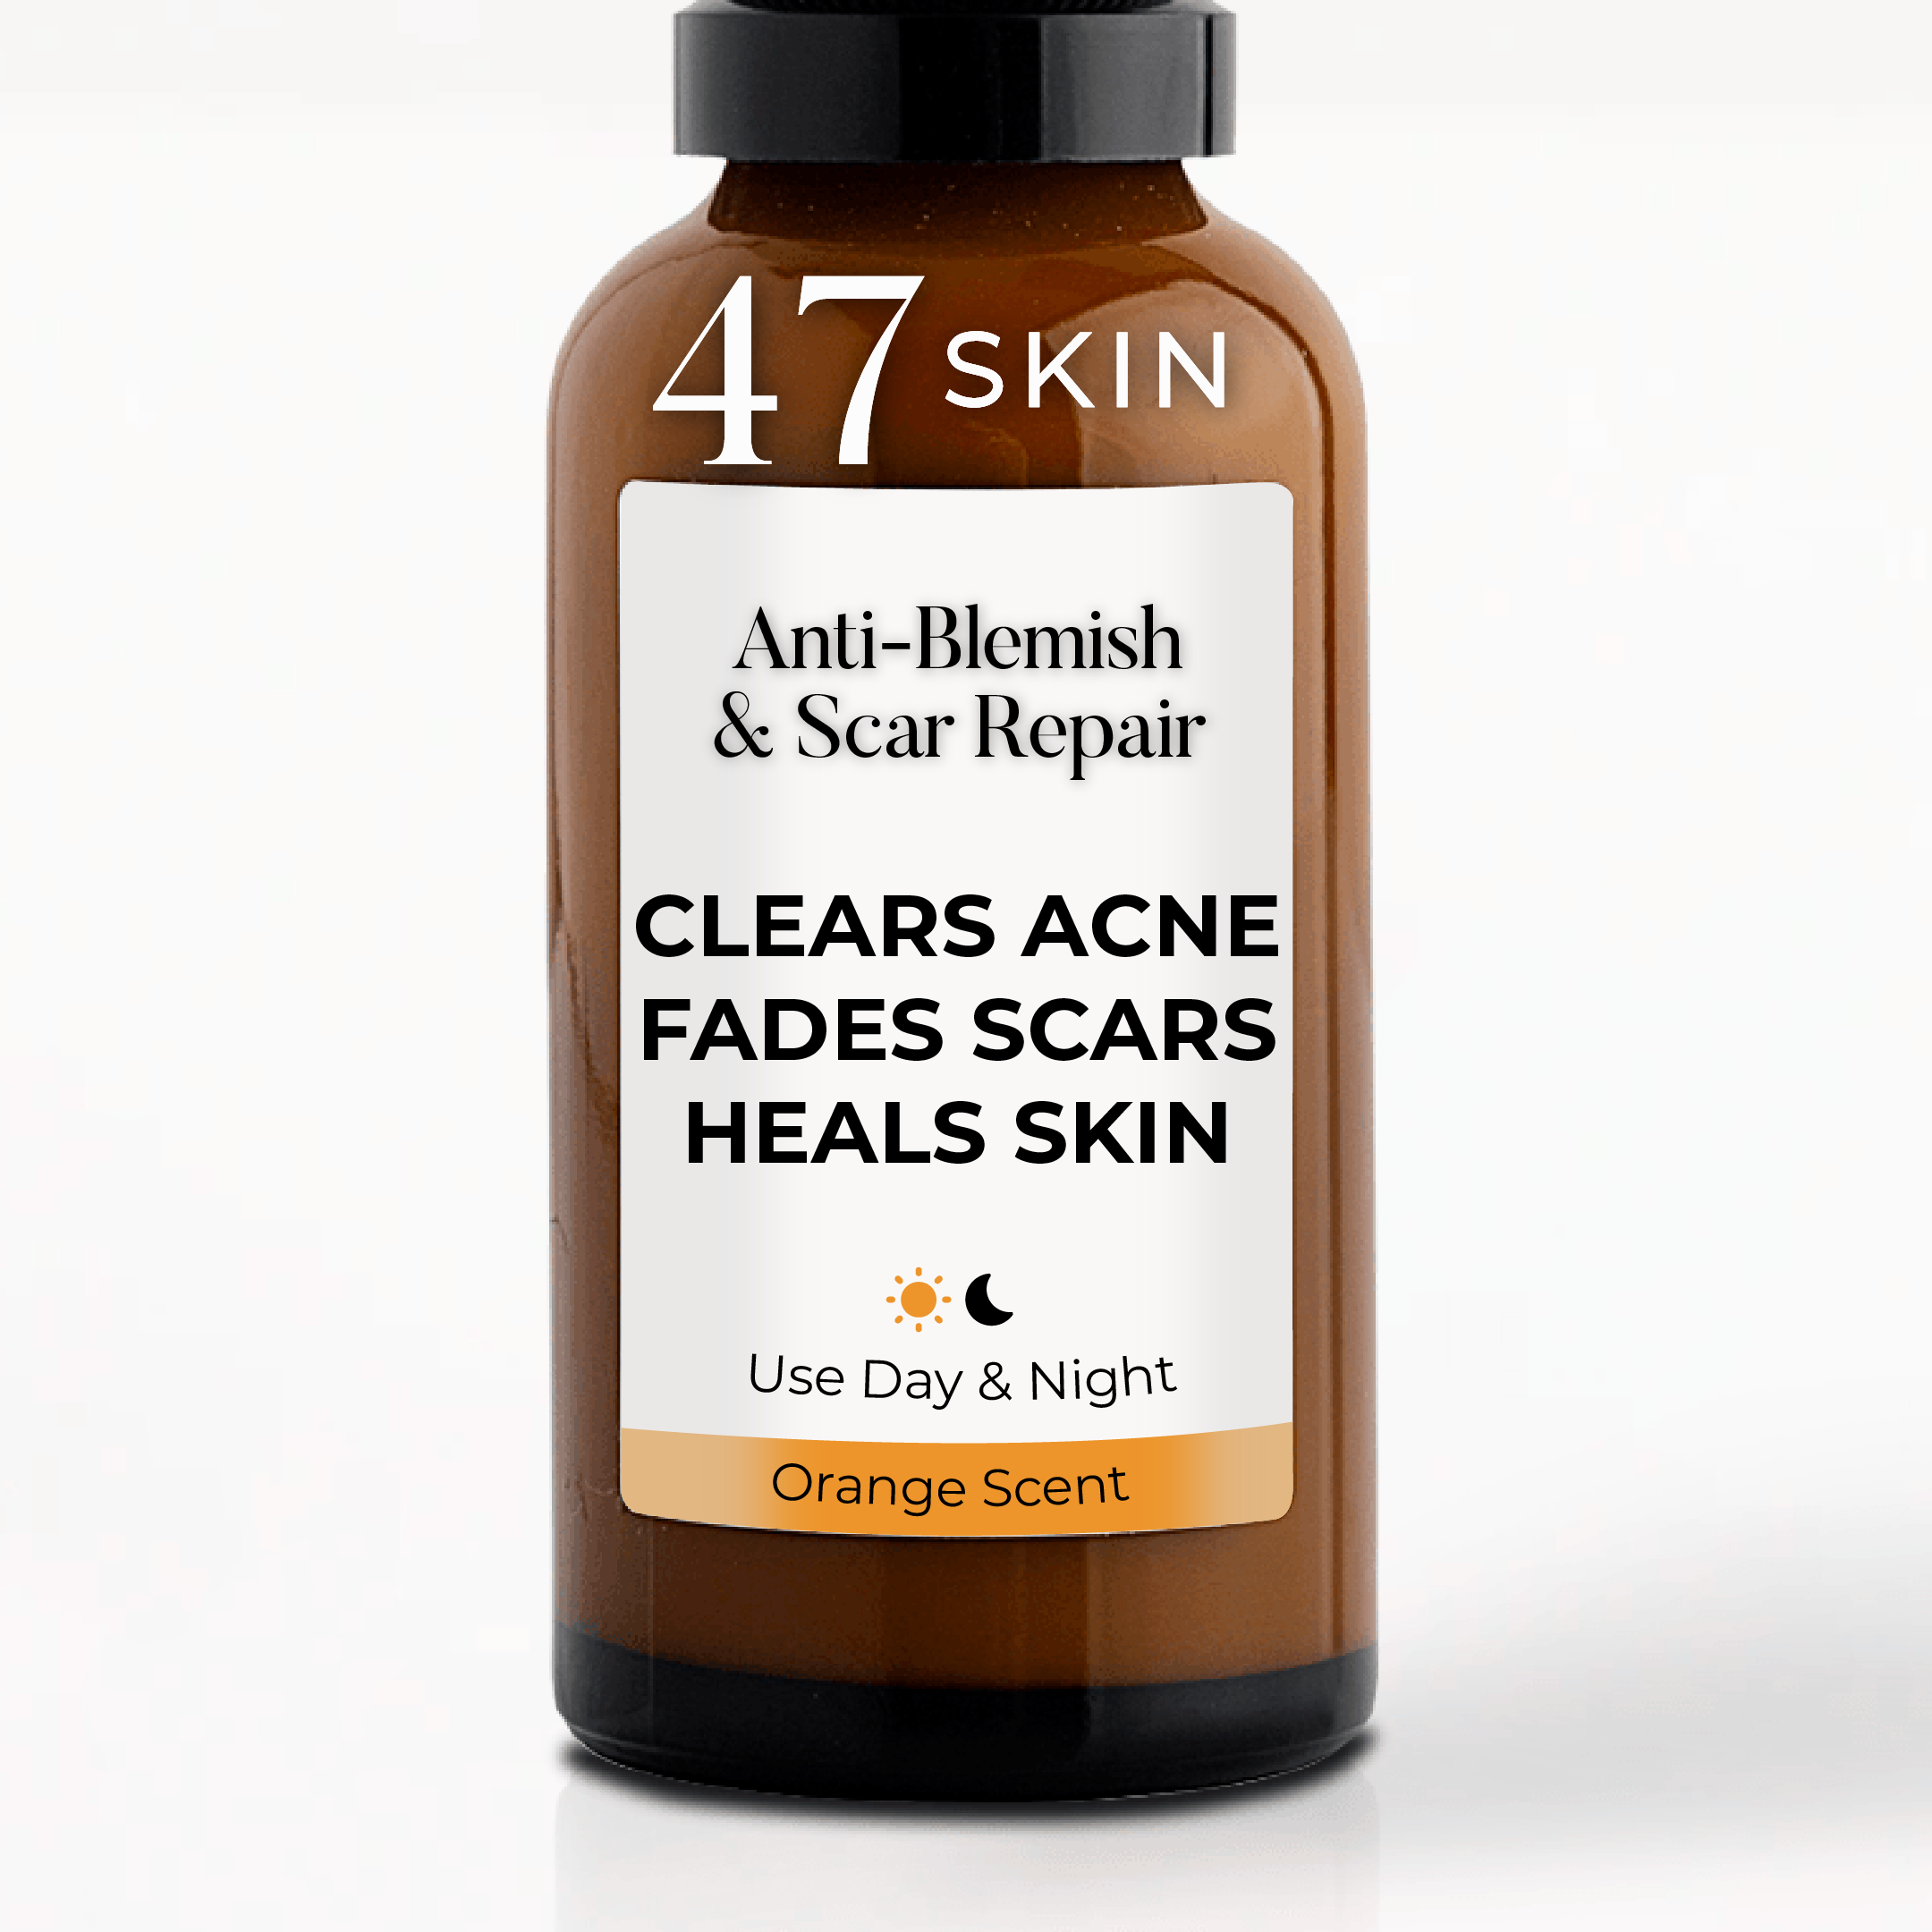 47 Skin’s #1 Best Selling Anti-blemish Serum